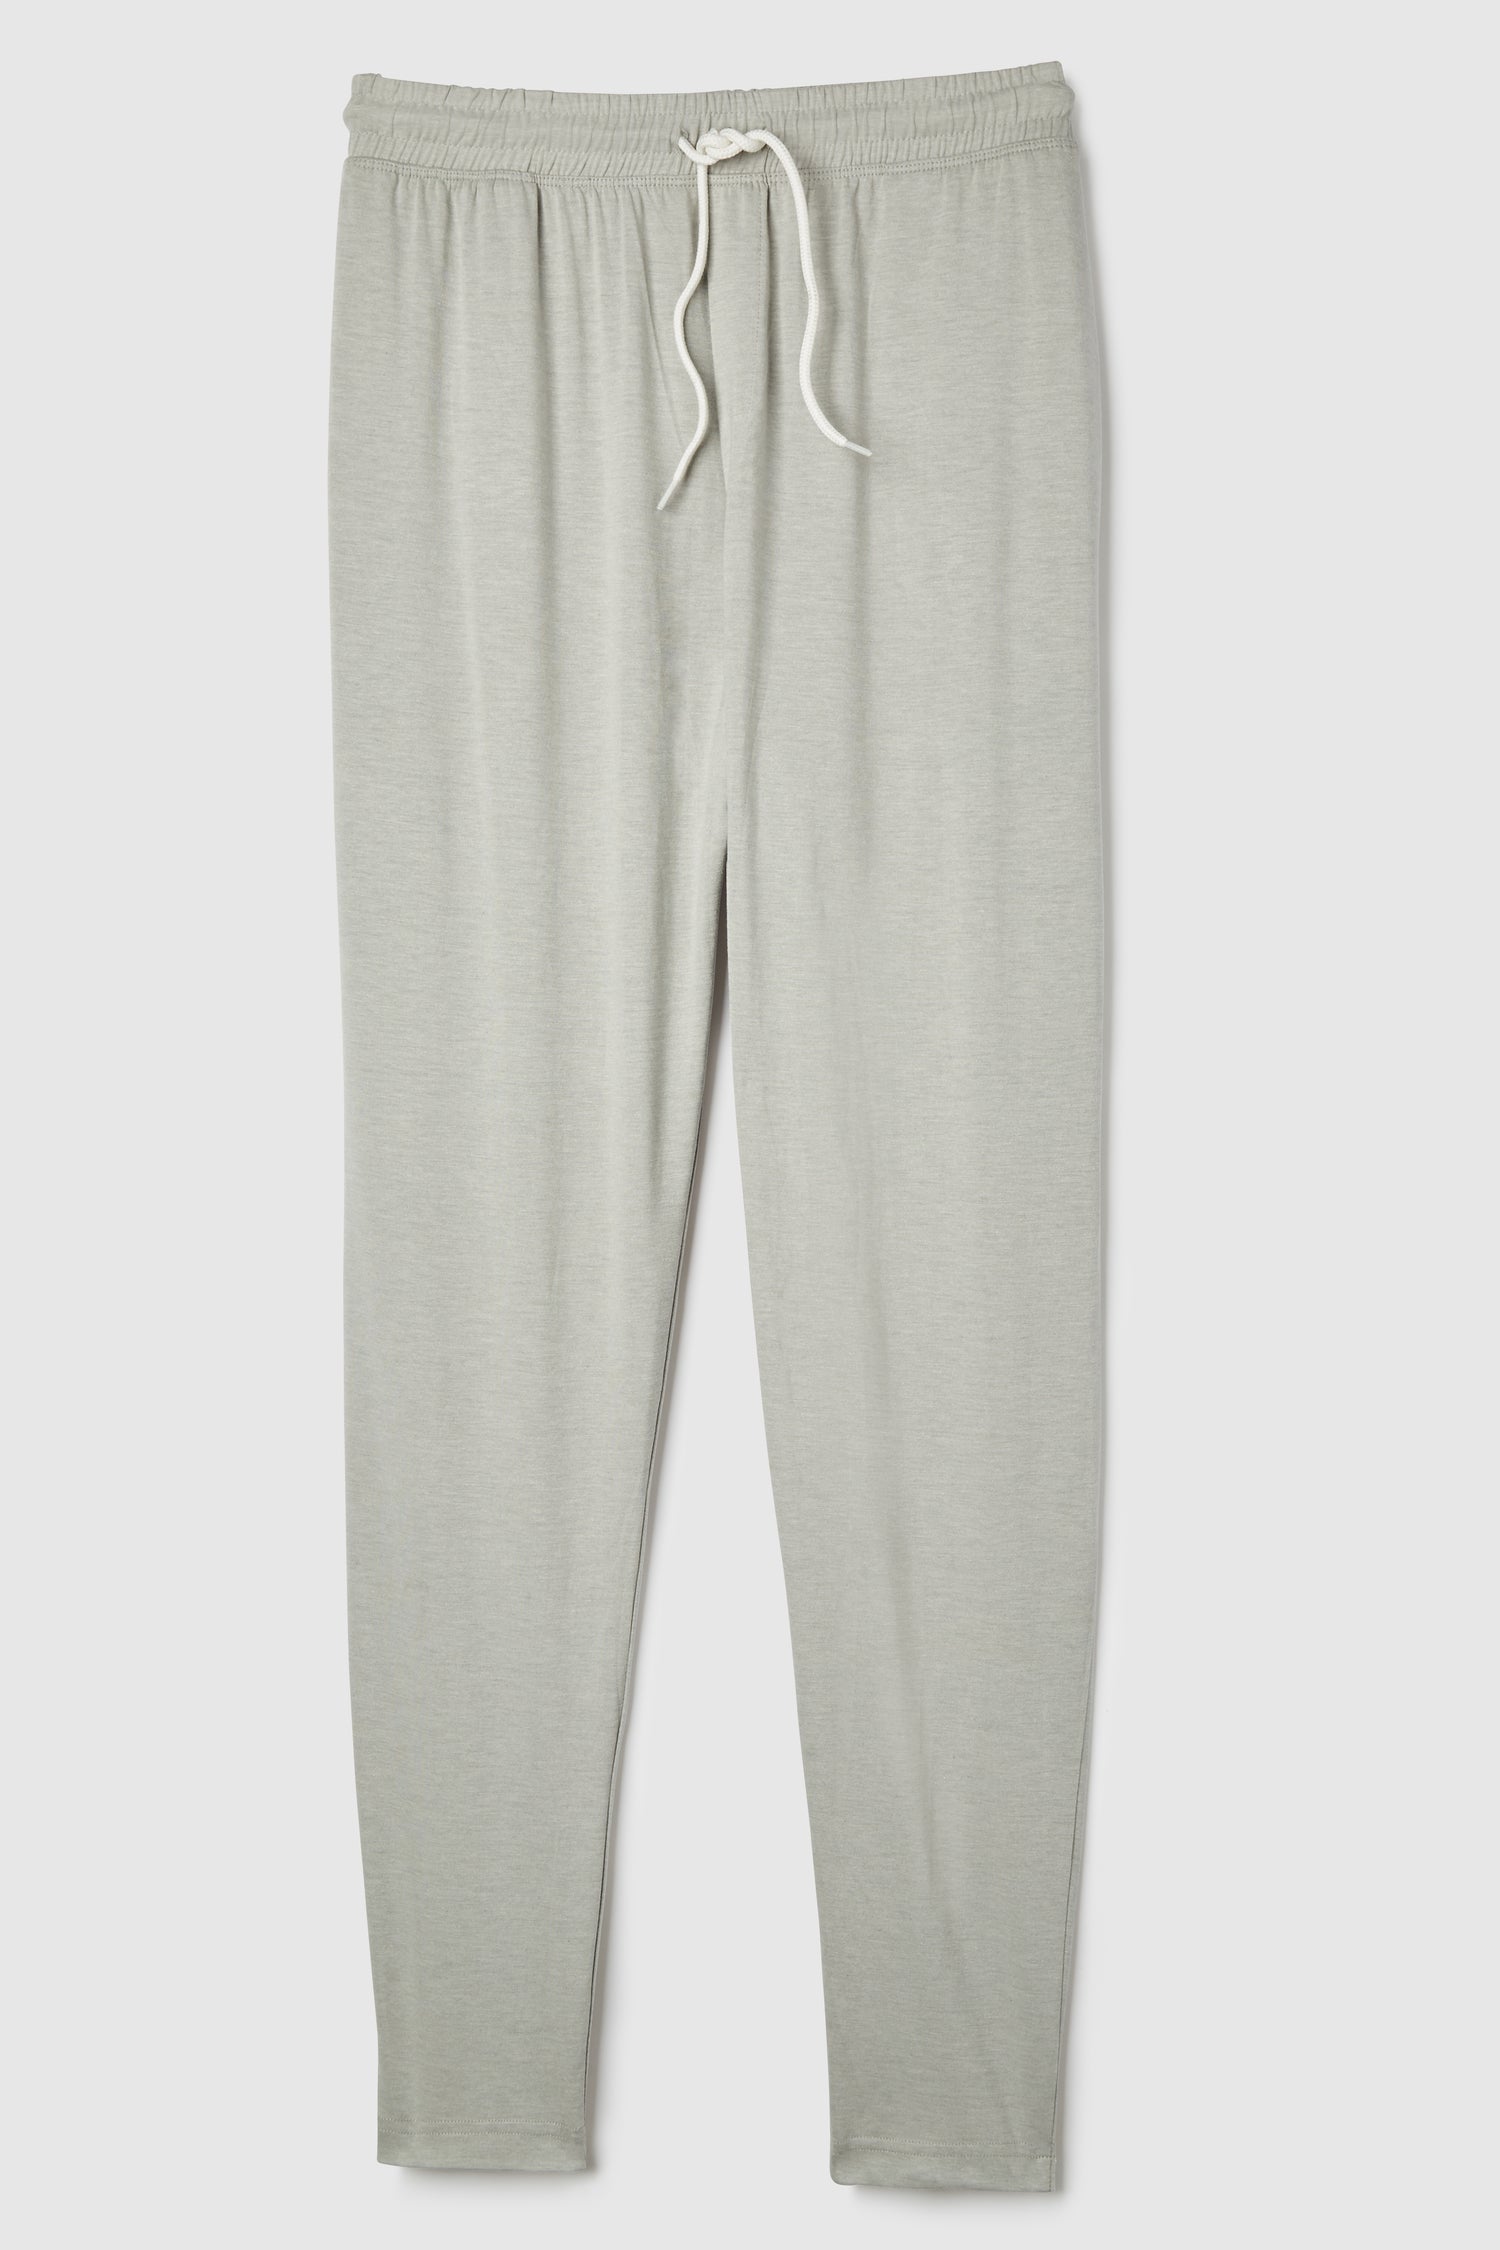 CALIDA RMX Sleep Leisure Long pants with side pockets grey